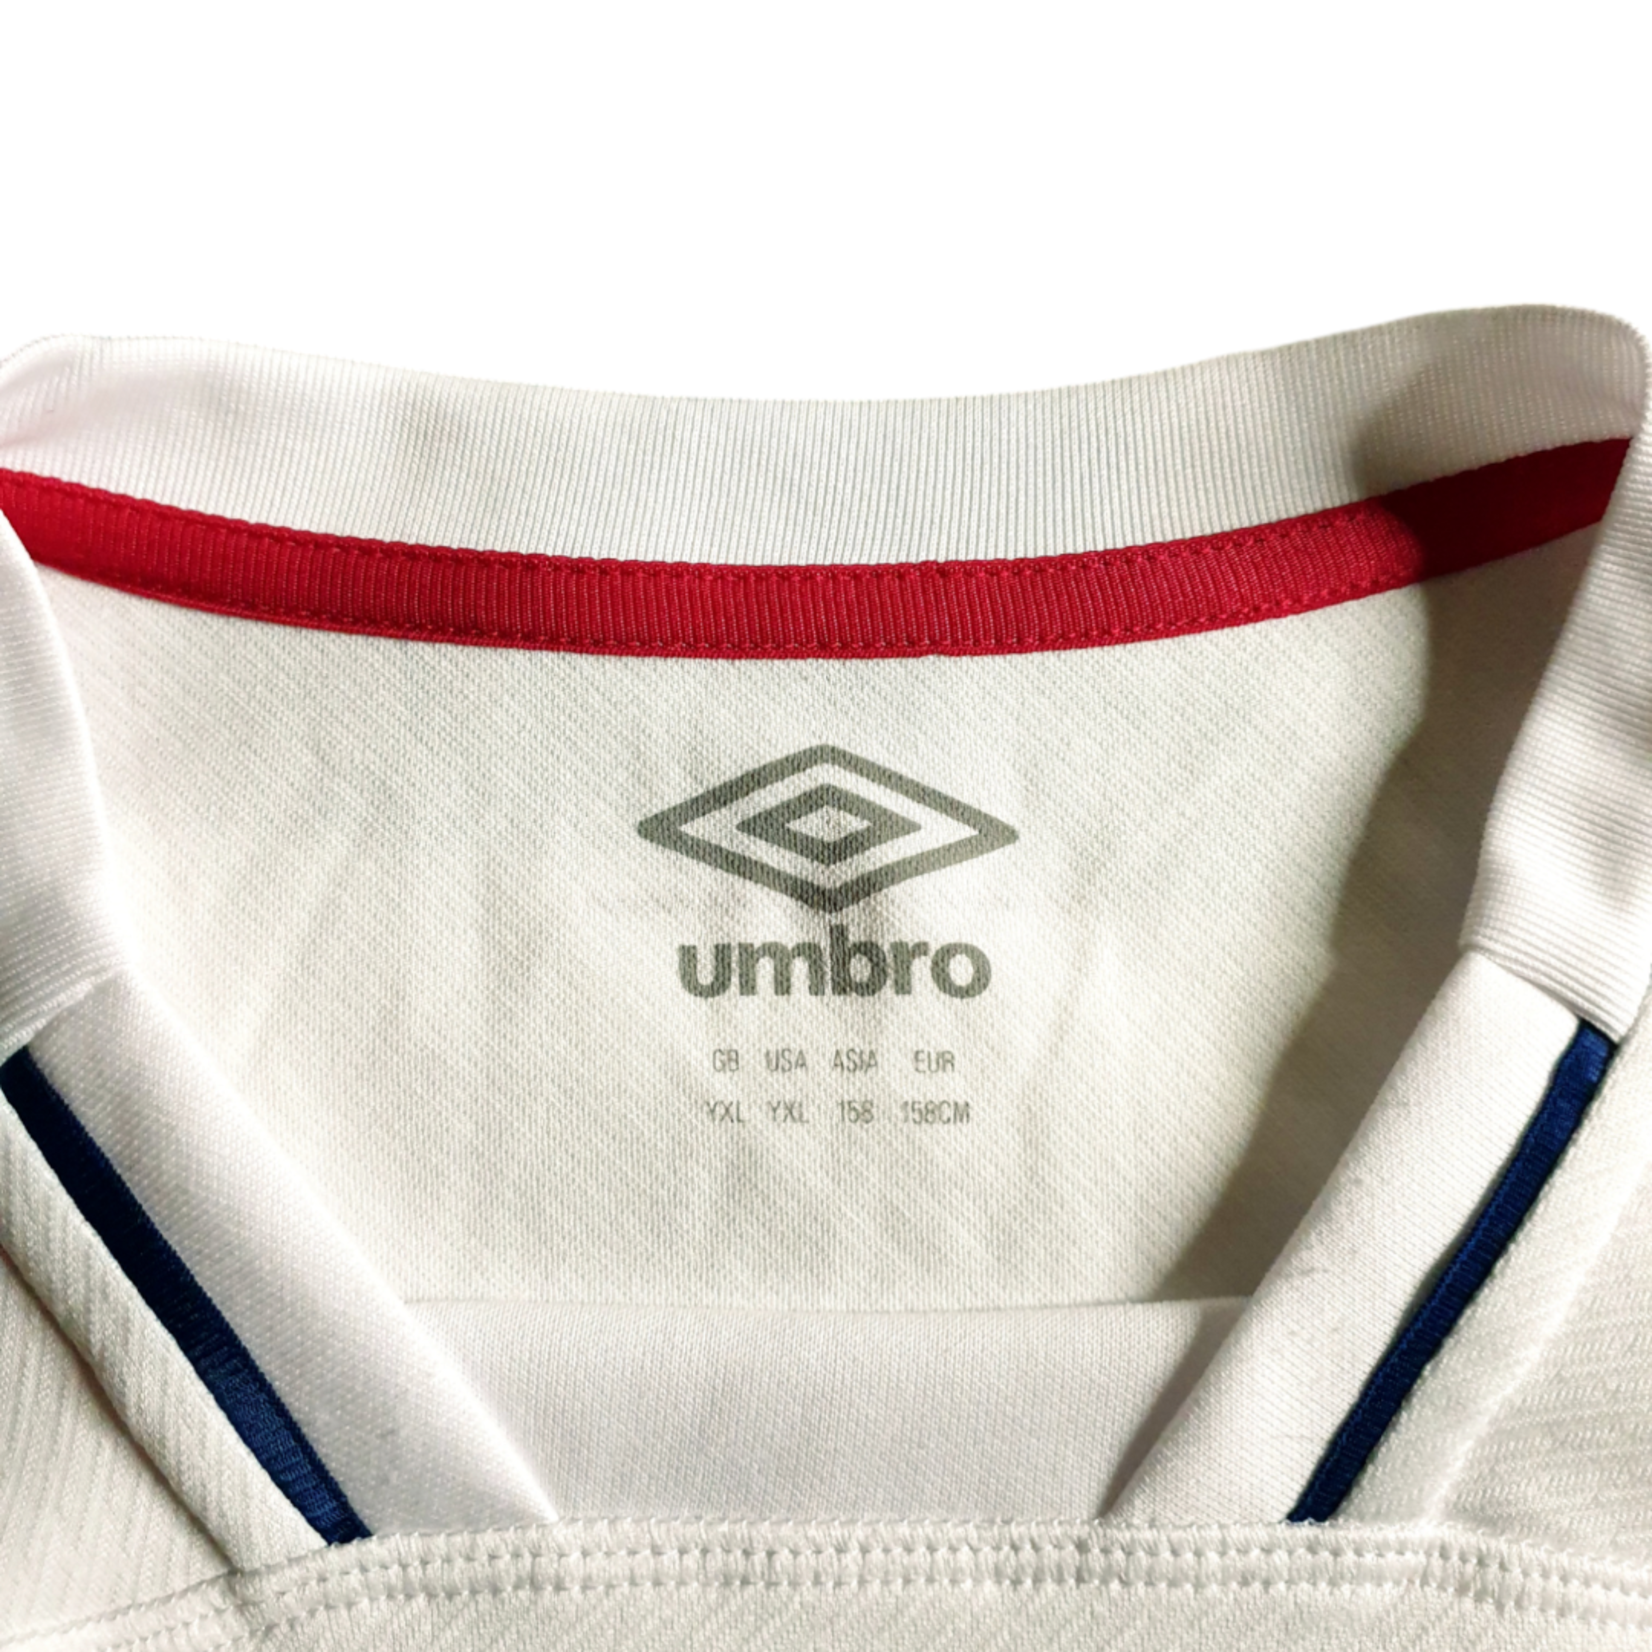 Umbro Origineel Umbro vintage rugby shirt Engeland 2021/22